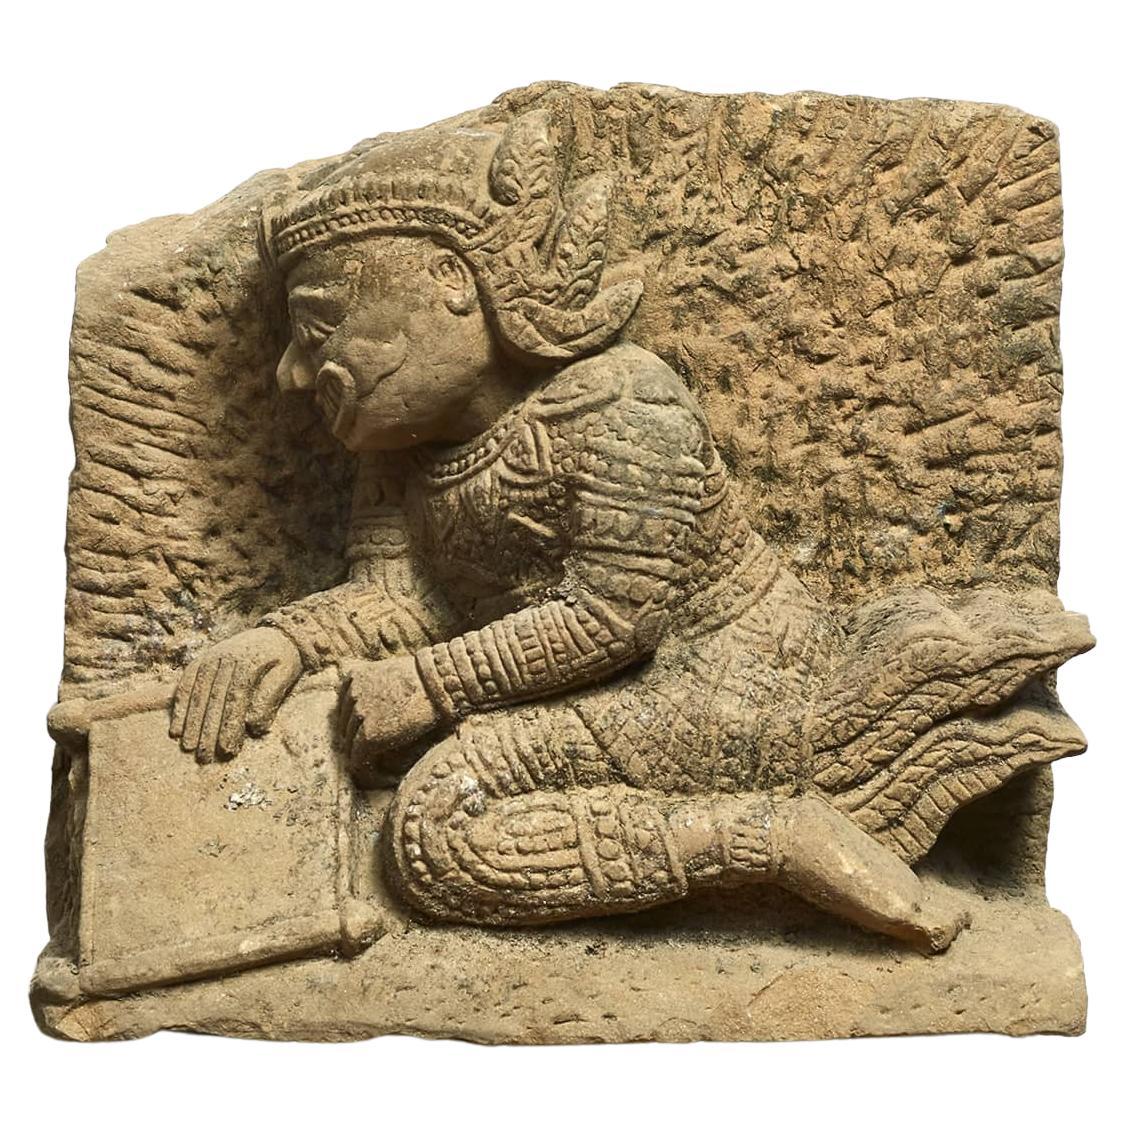 500-600 Years Old Hindu Monkey-God Hanuman Carved In Sandstone For Sale